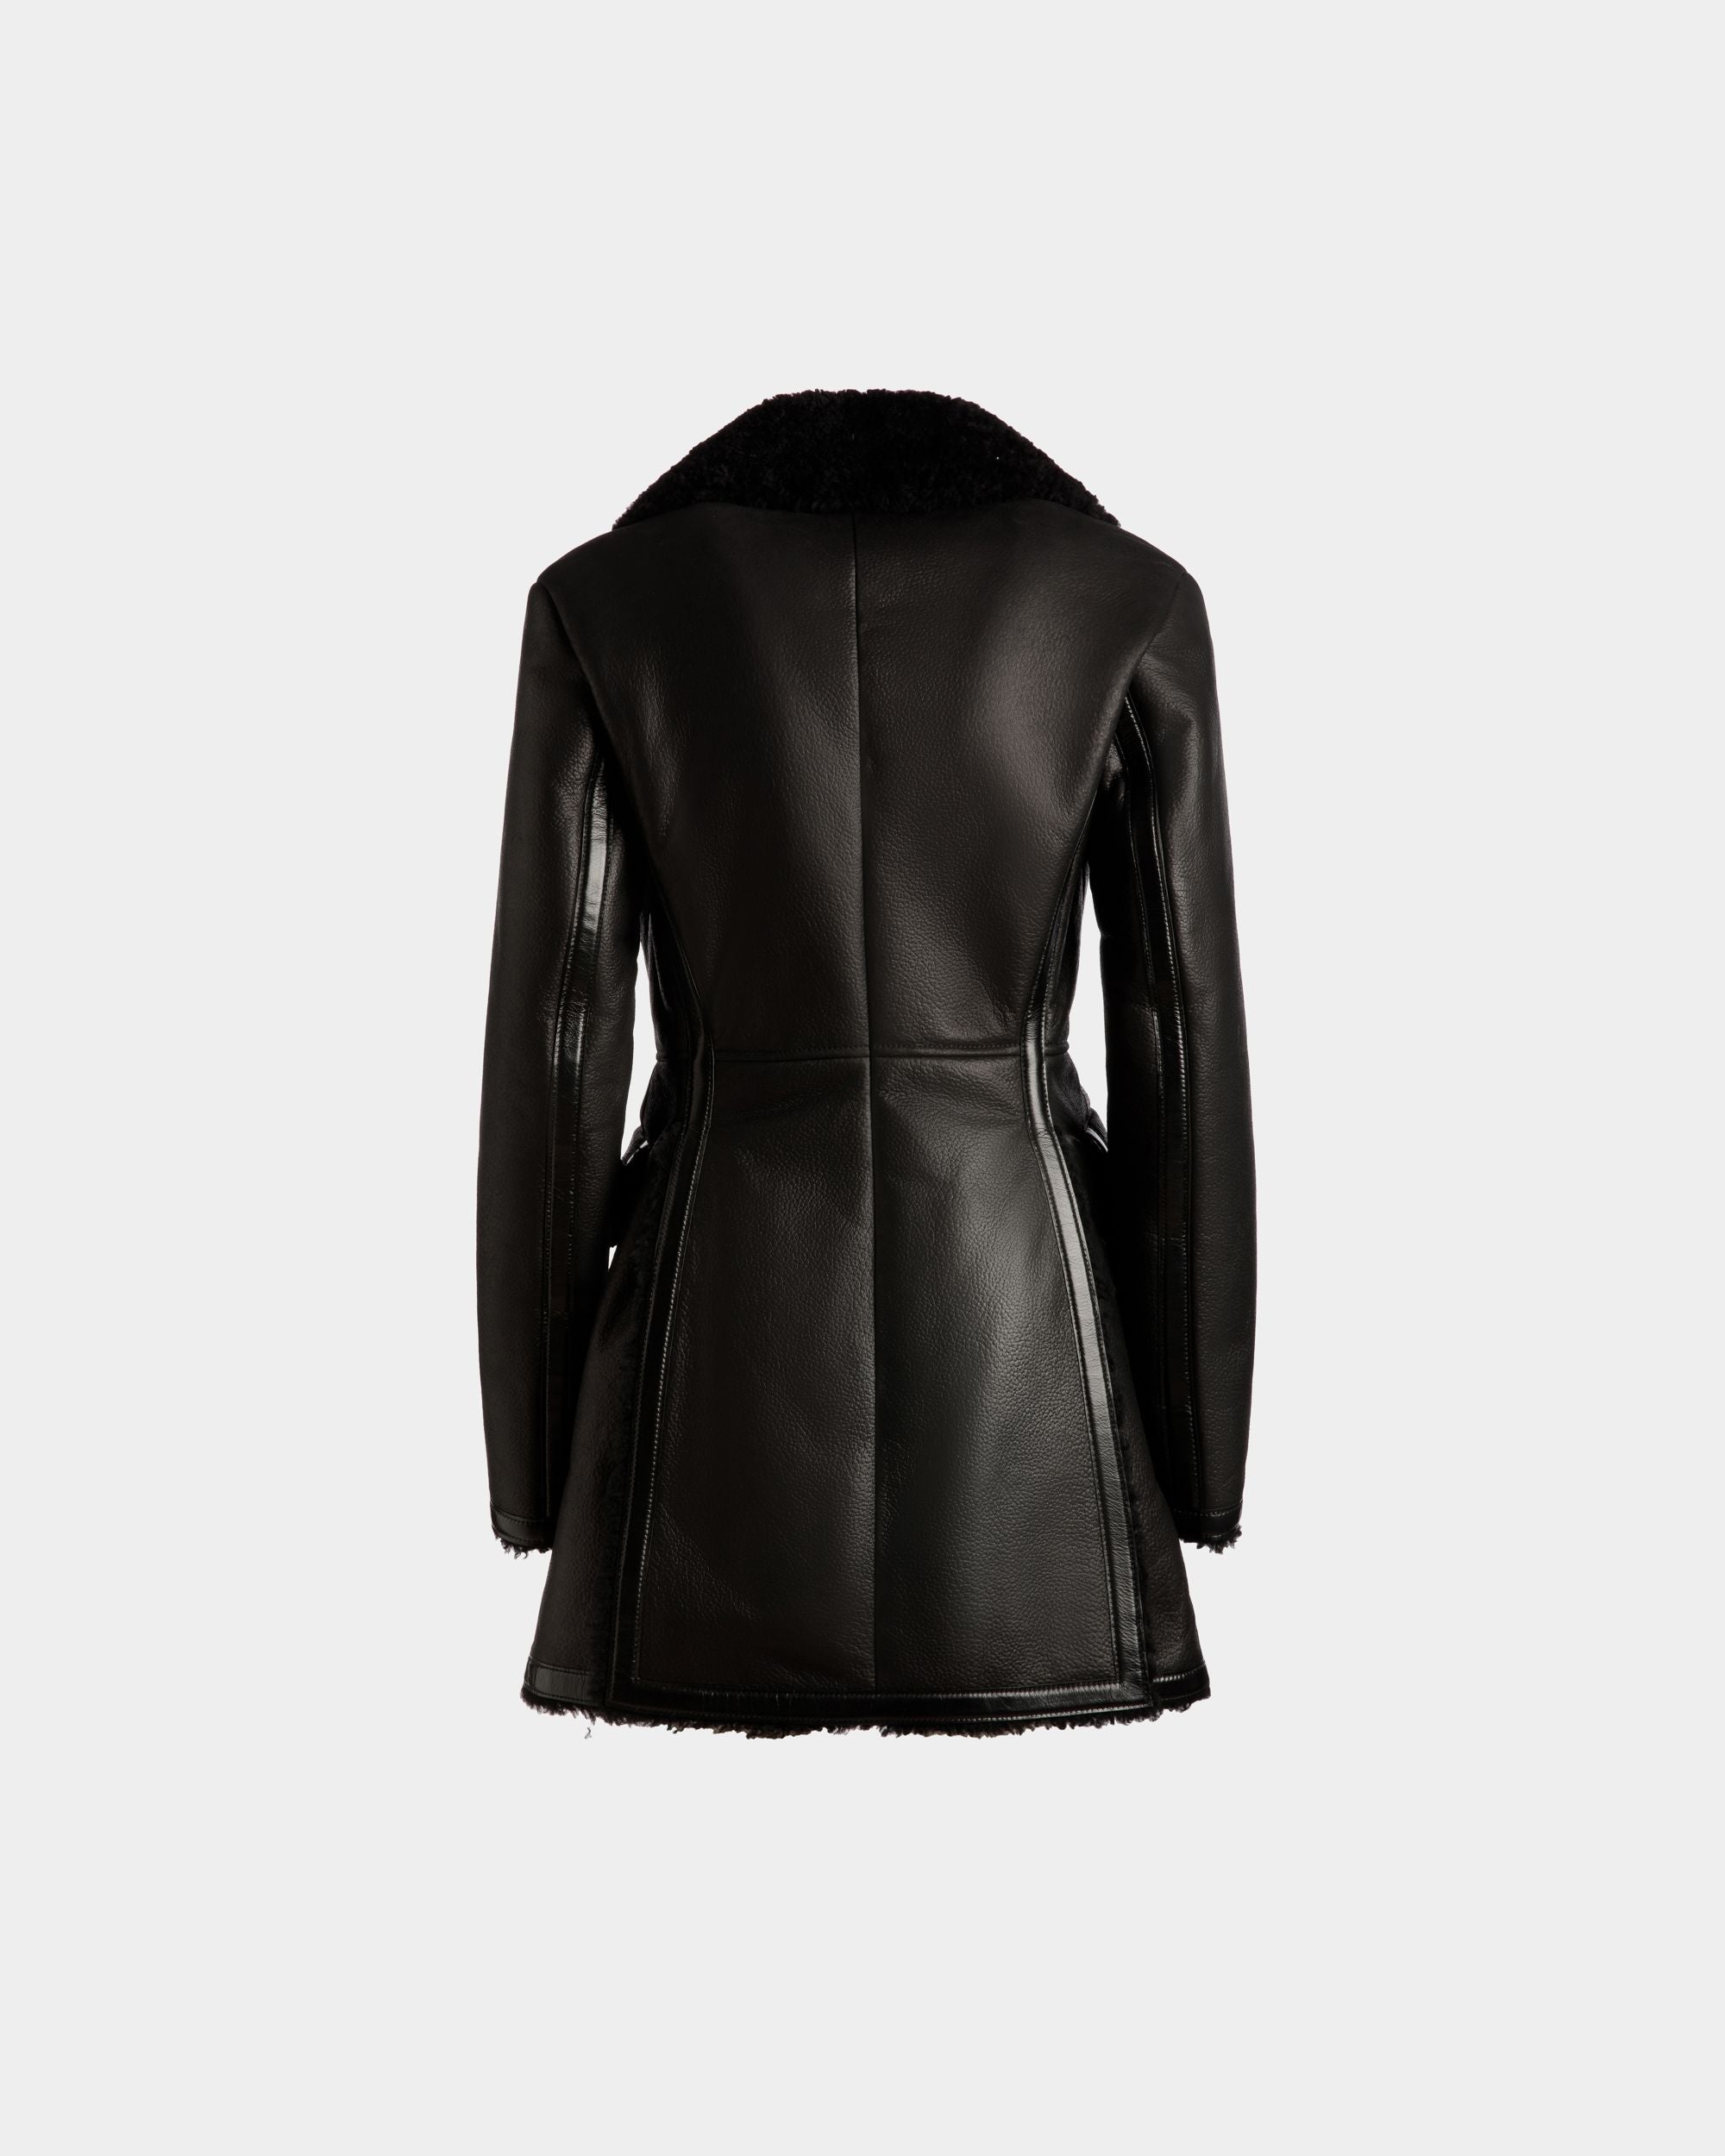 Wool-lined Coat | Women's Coat | Black Leather | Bally | Still Life Back